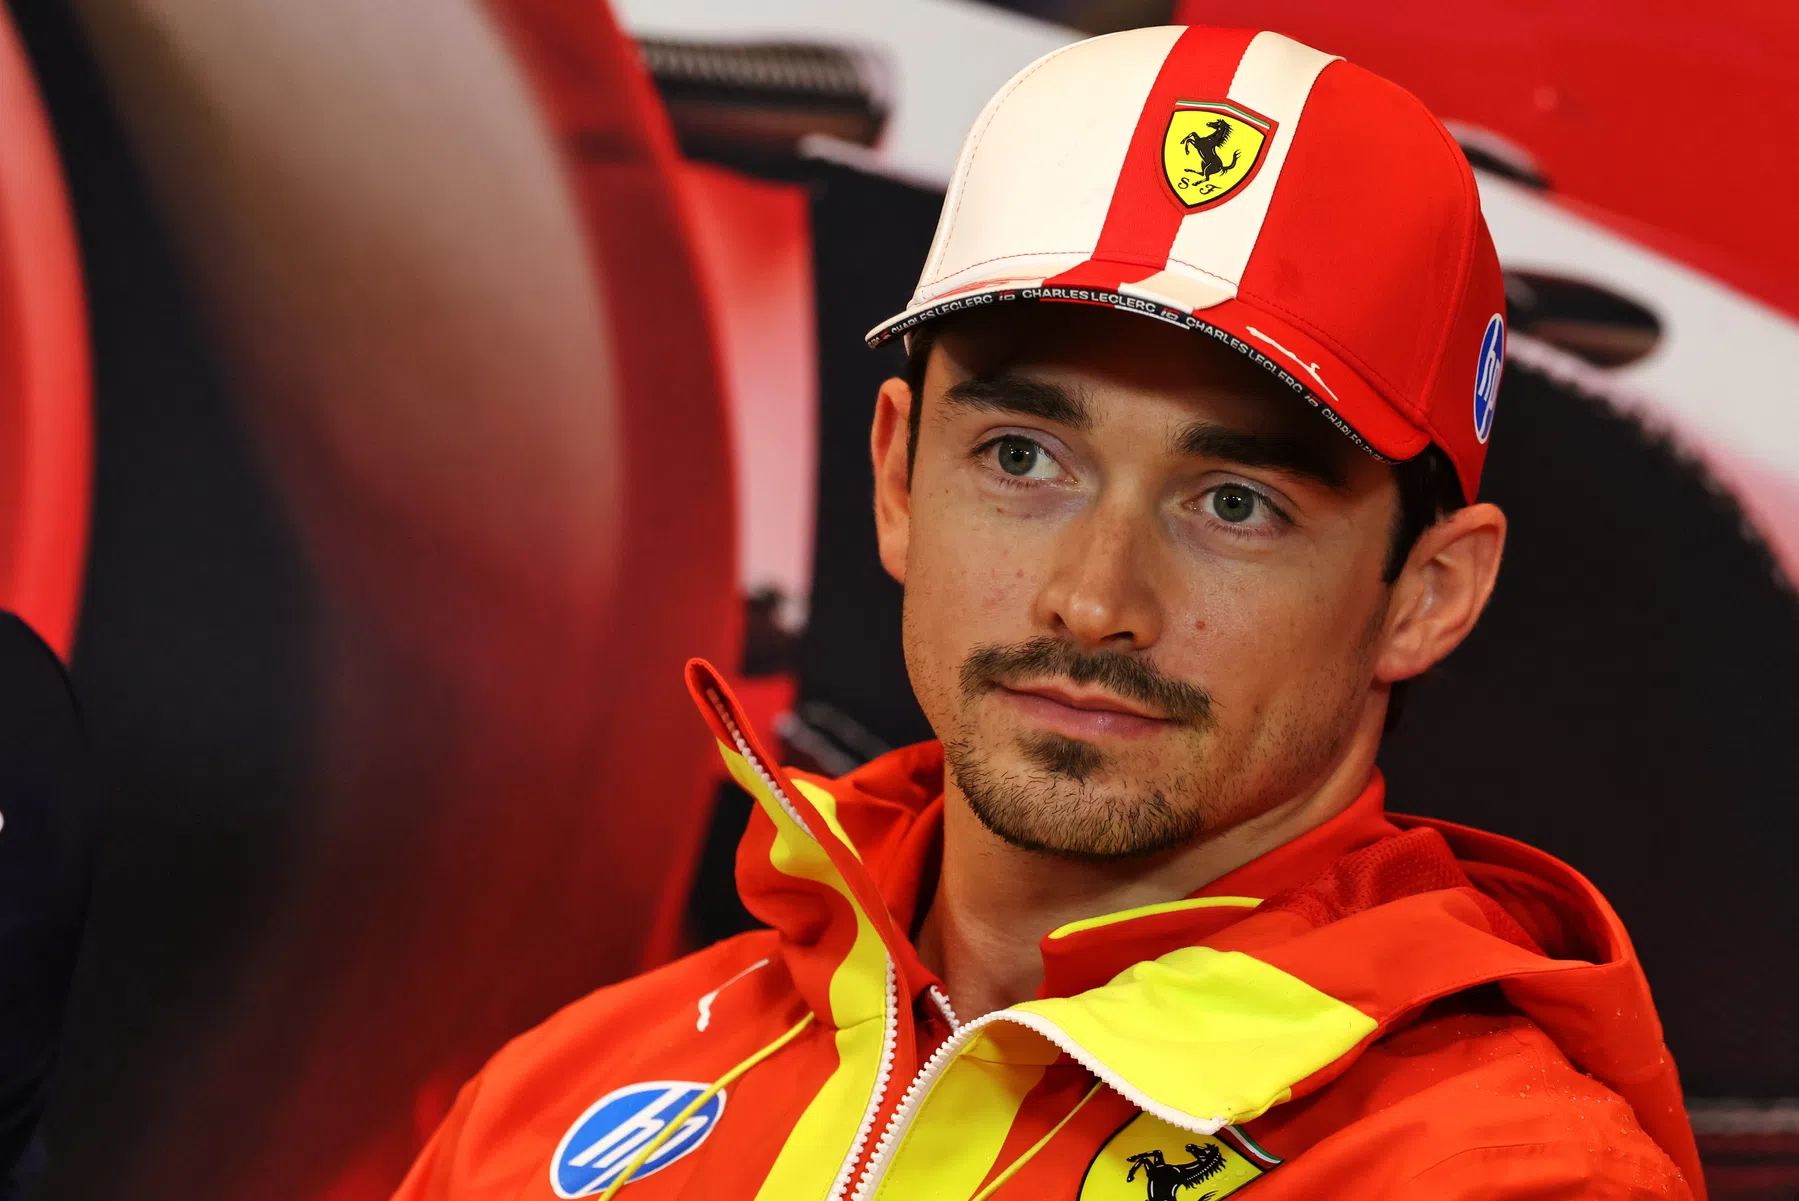 Leclerc jokes about Piastri having Monaco as his home race